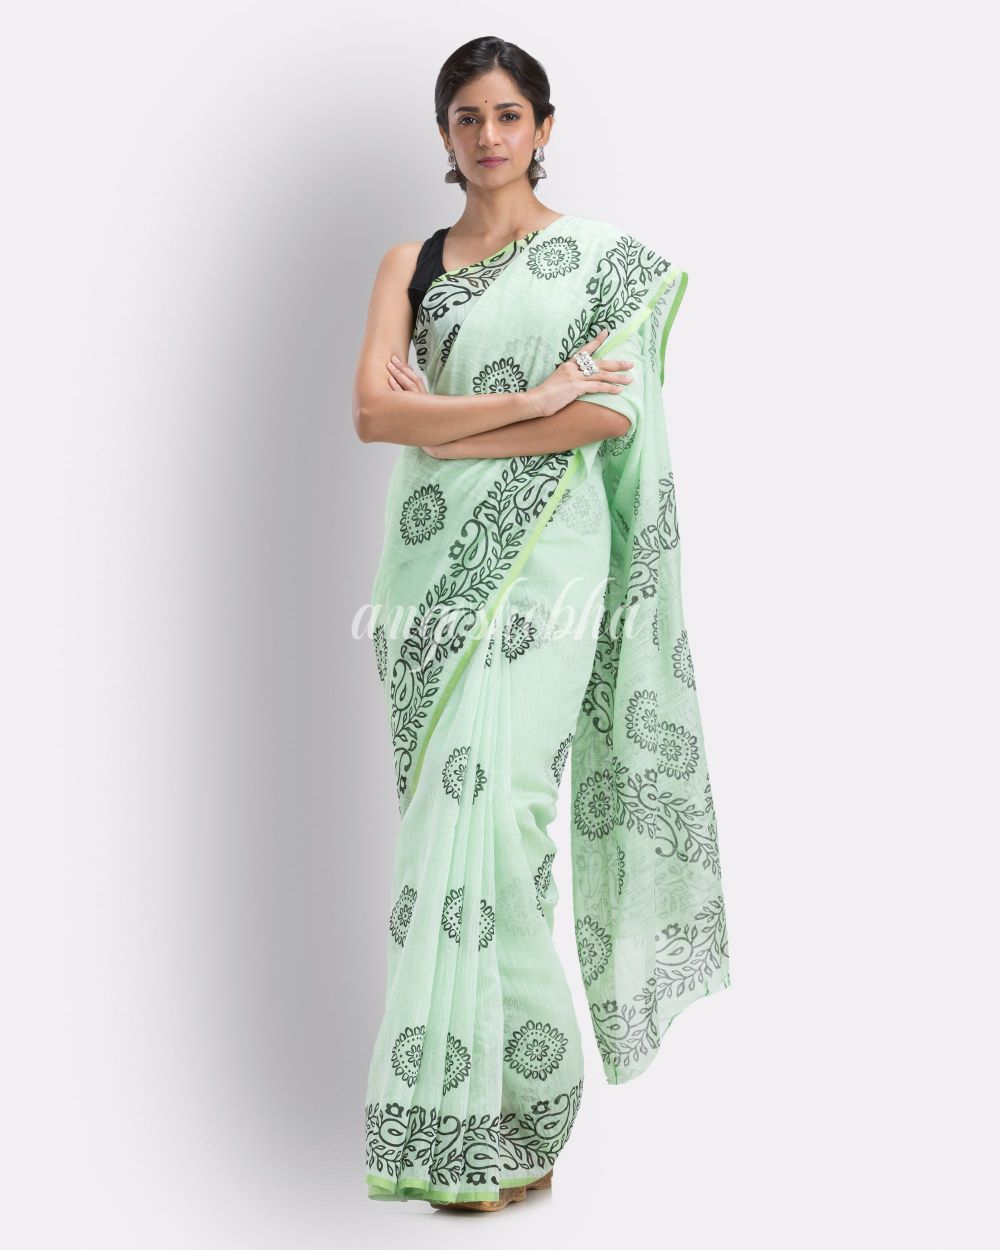 Indian women pale green festive cotton blend saree angoshobha